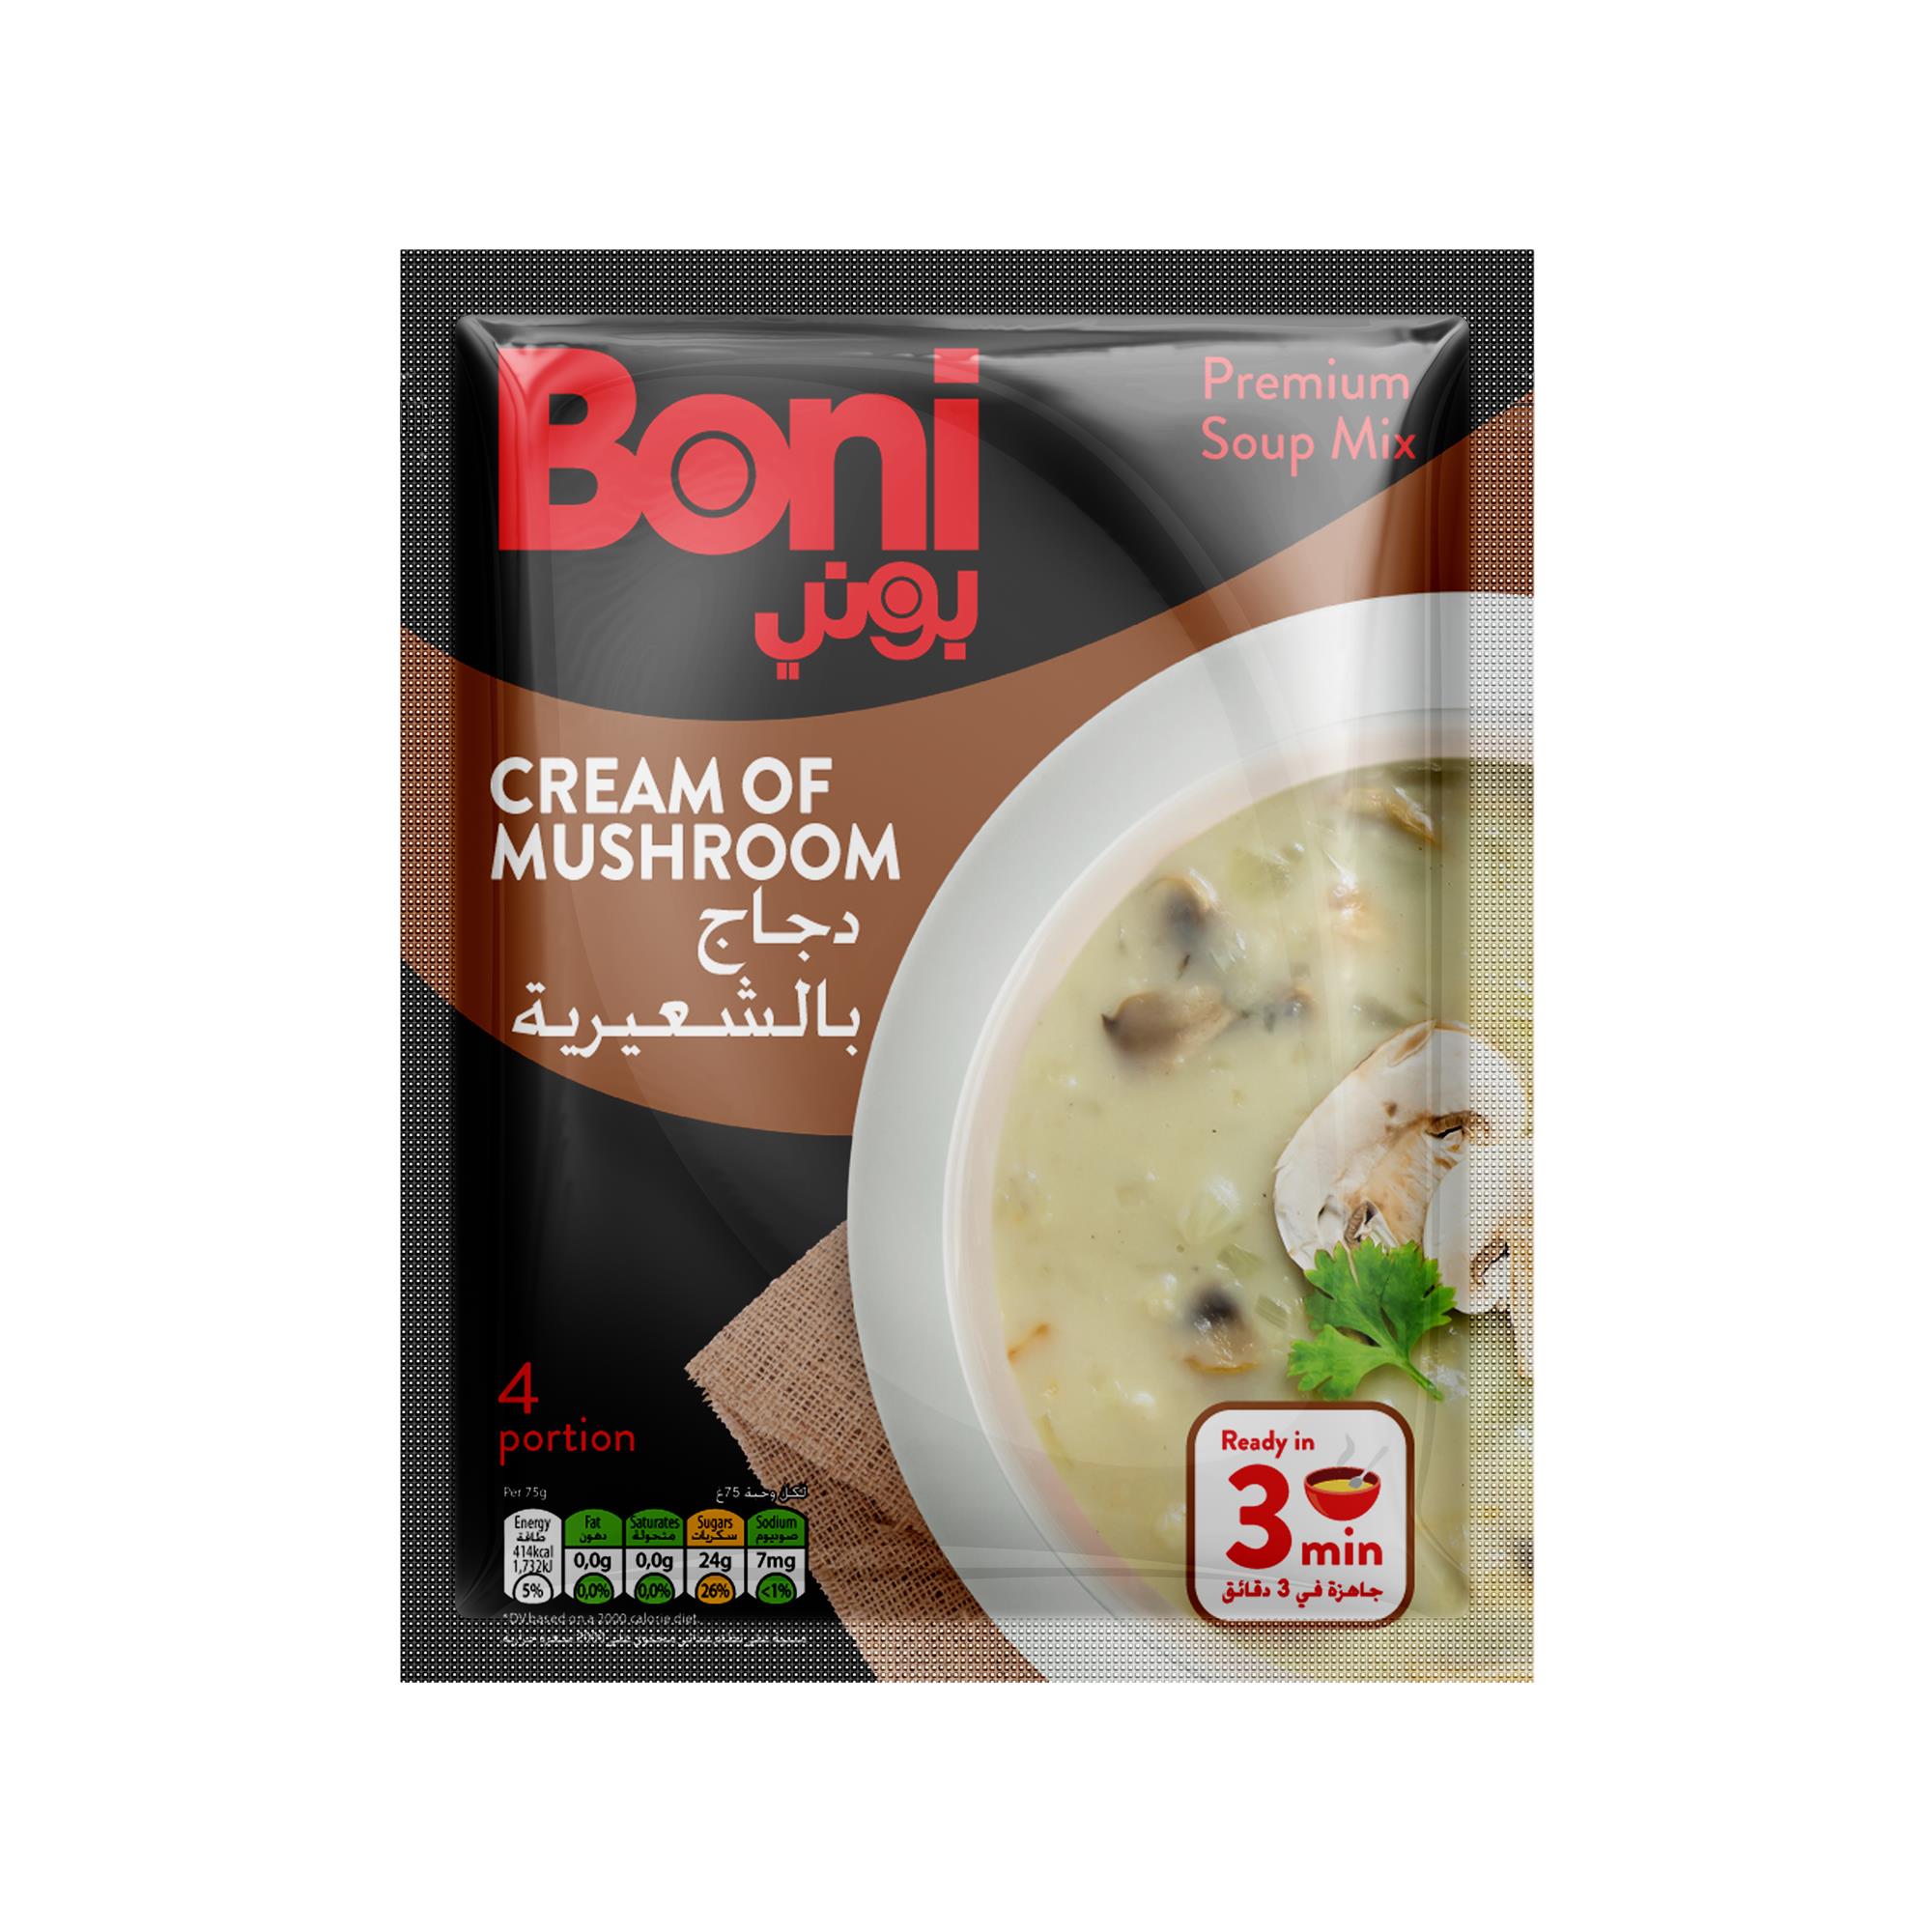 Boni Premium Soup Mix